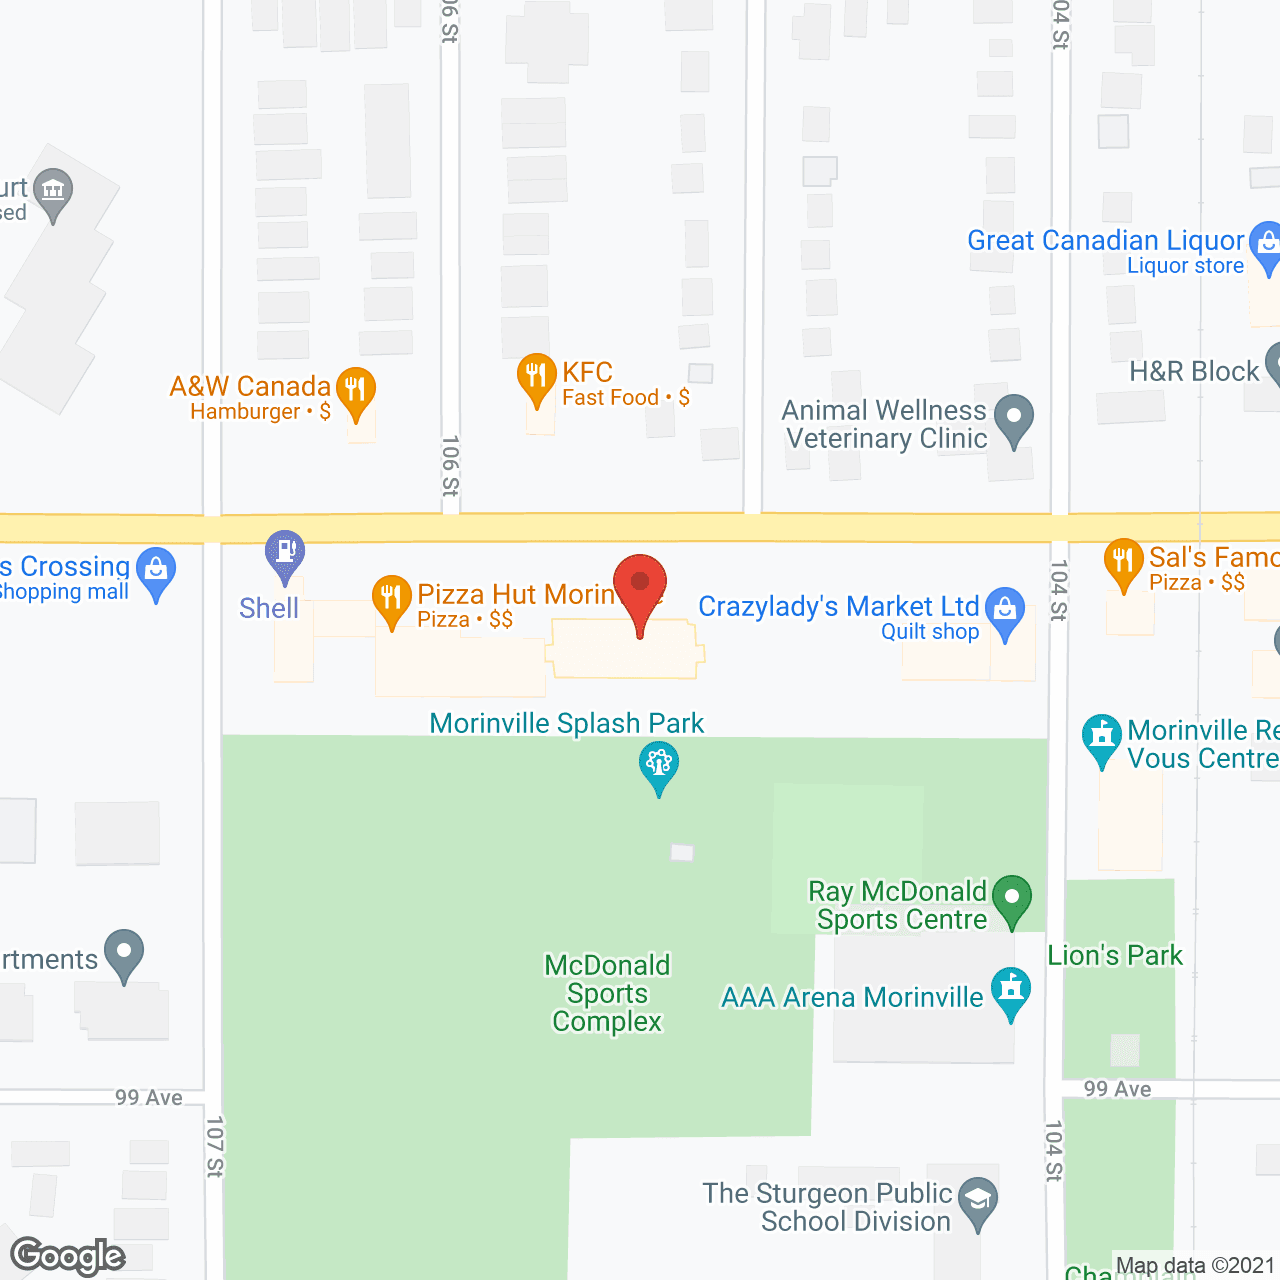 100 Block West in google map